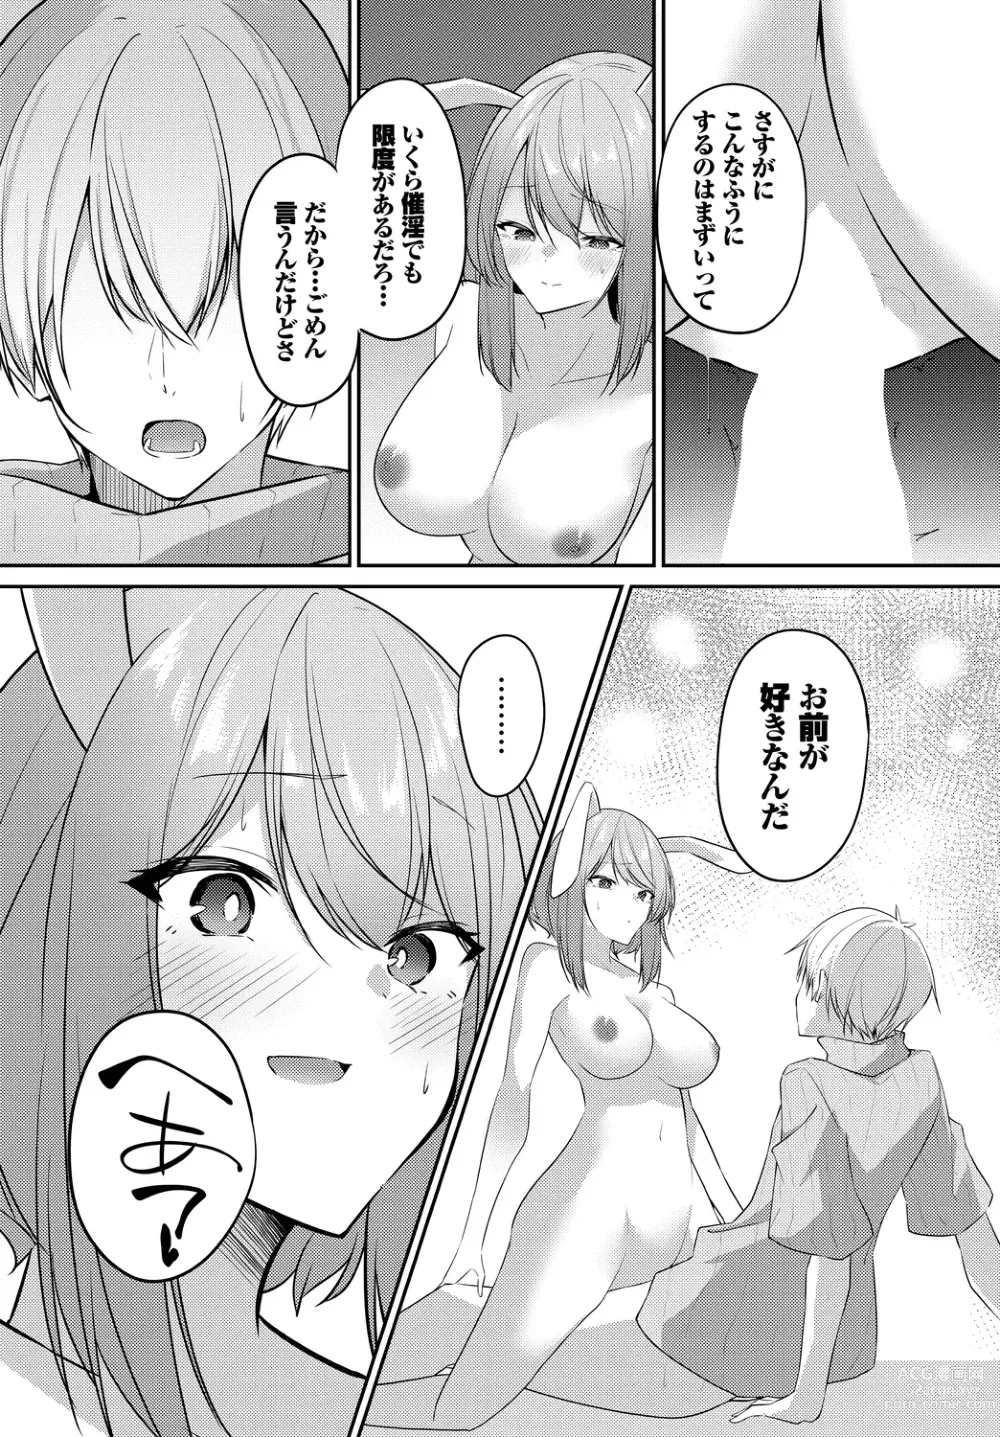 Page 156 of manga Meikyuu Lilac - Laberynth Lilac.